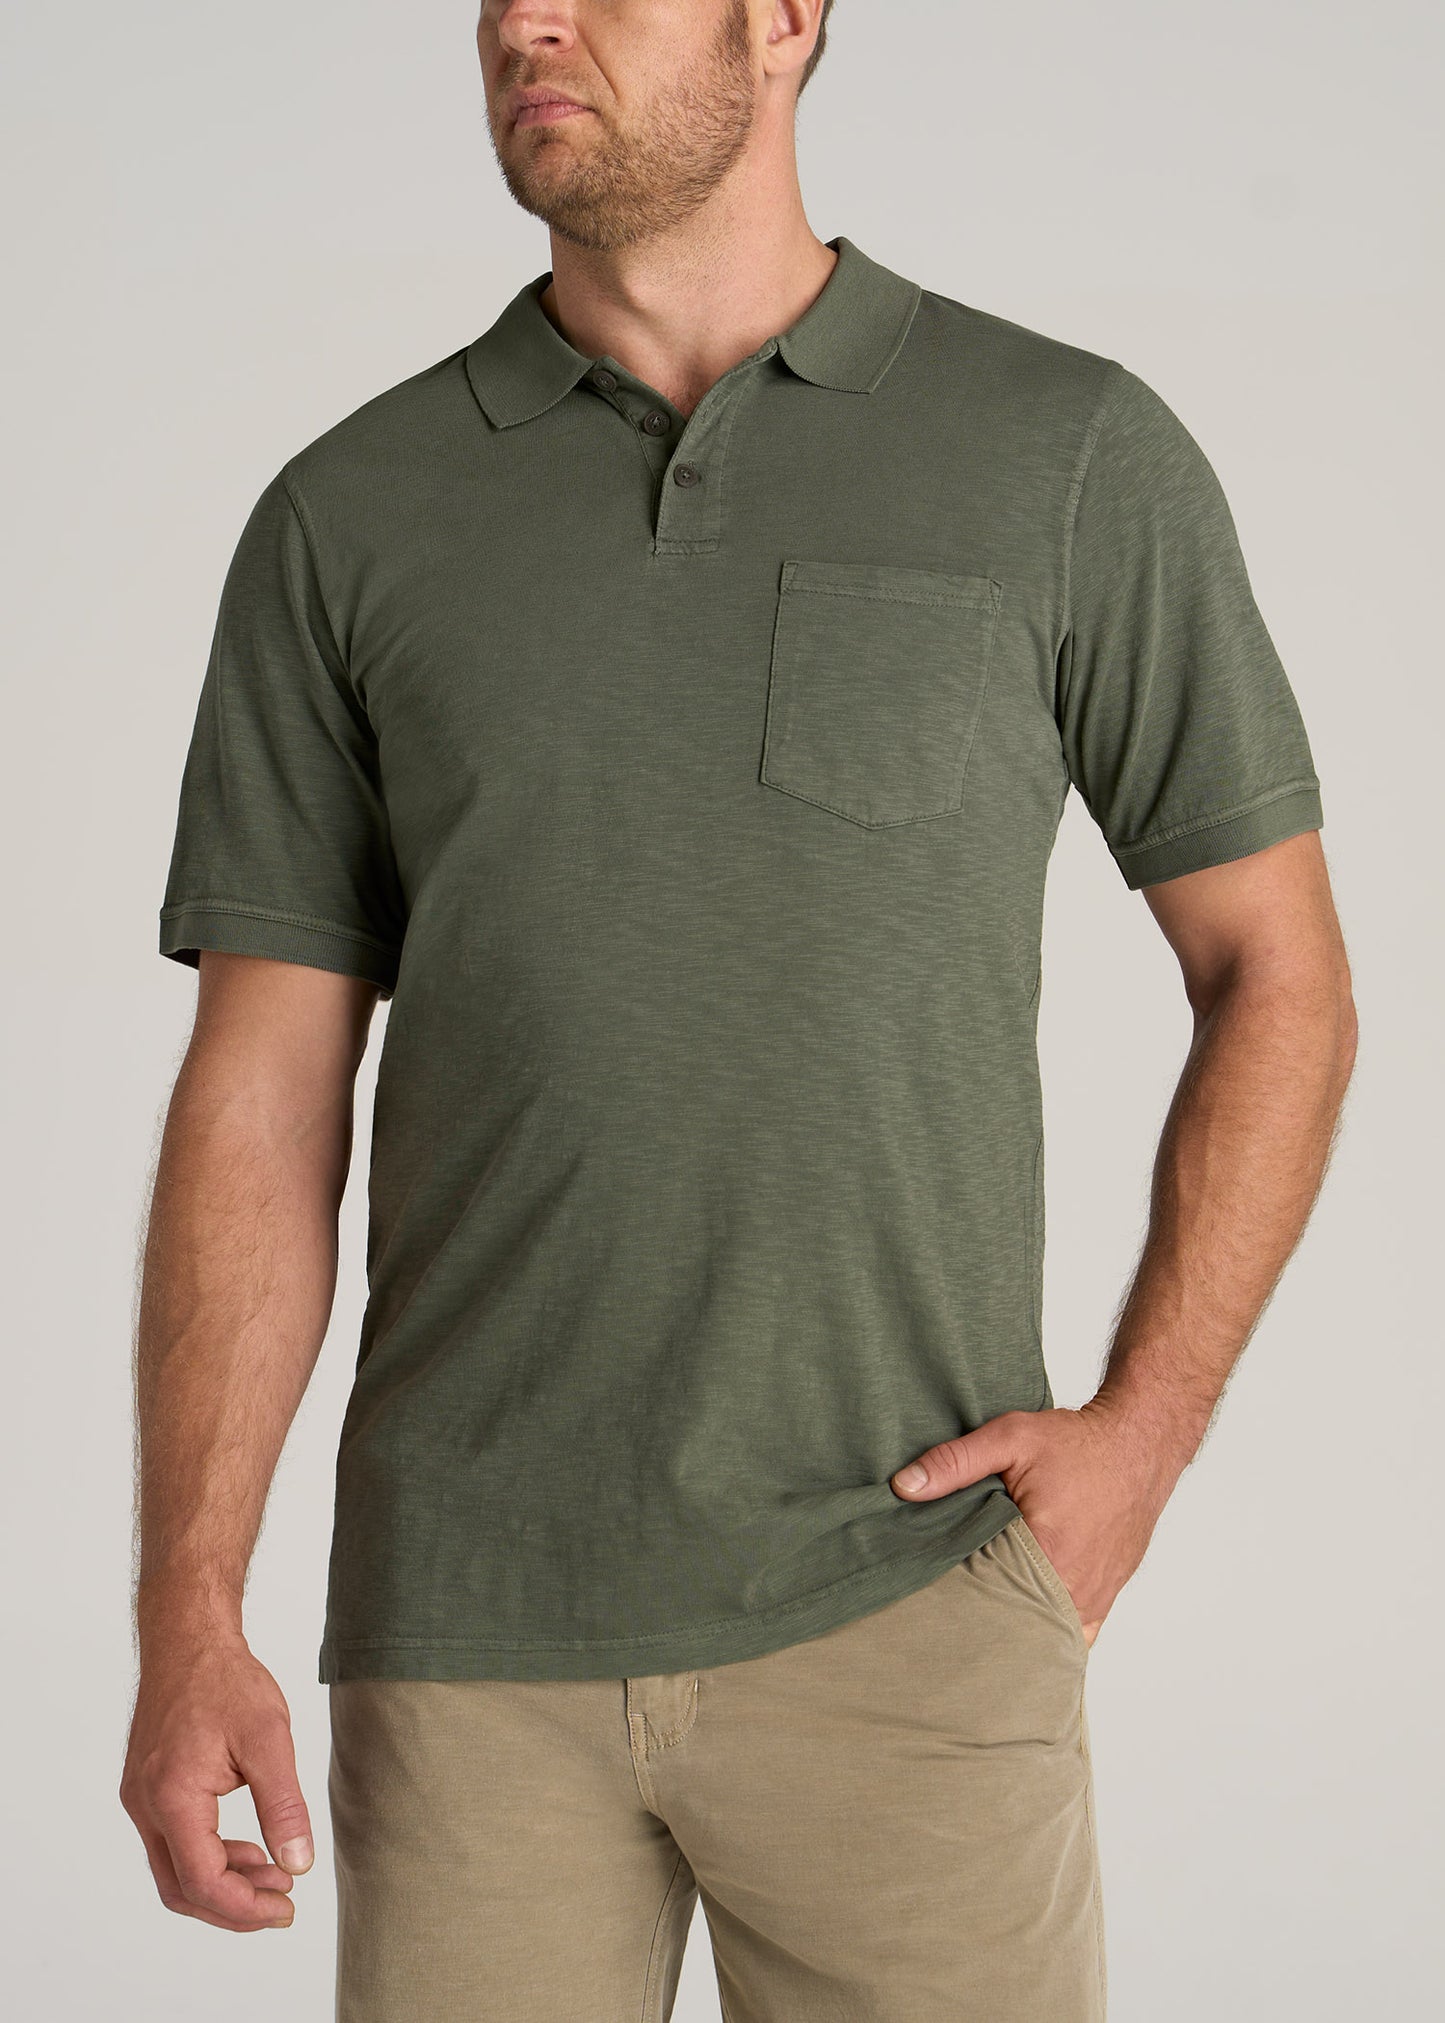 American-Tall-Men-LJ-Slub-Pocket-Polo-Shirt-Vintage-Canoe-Green-front